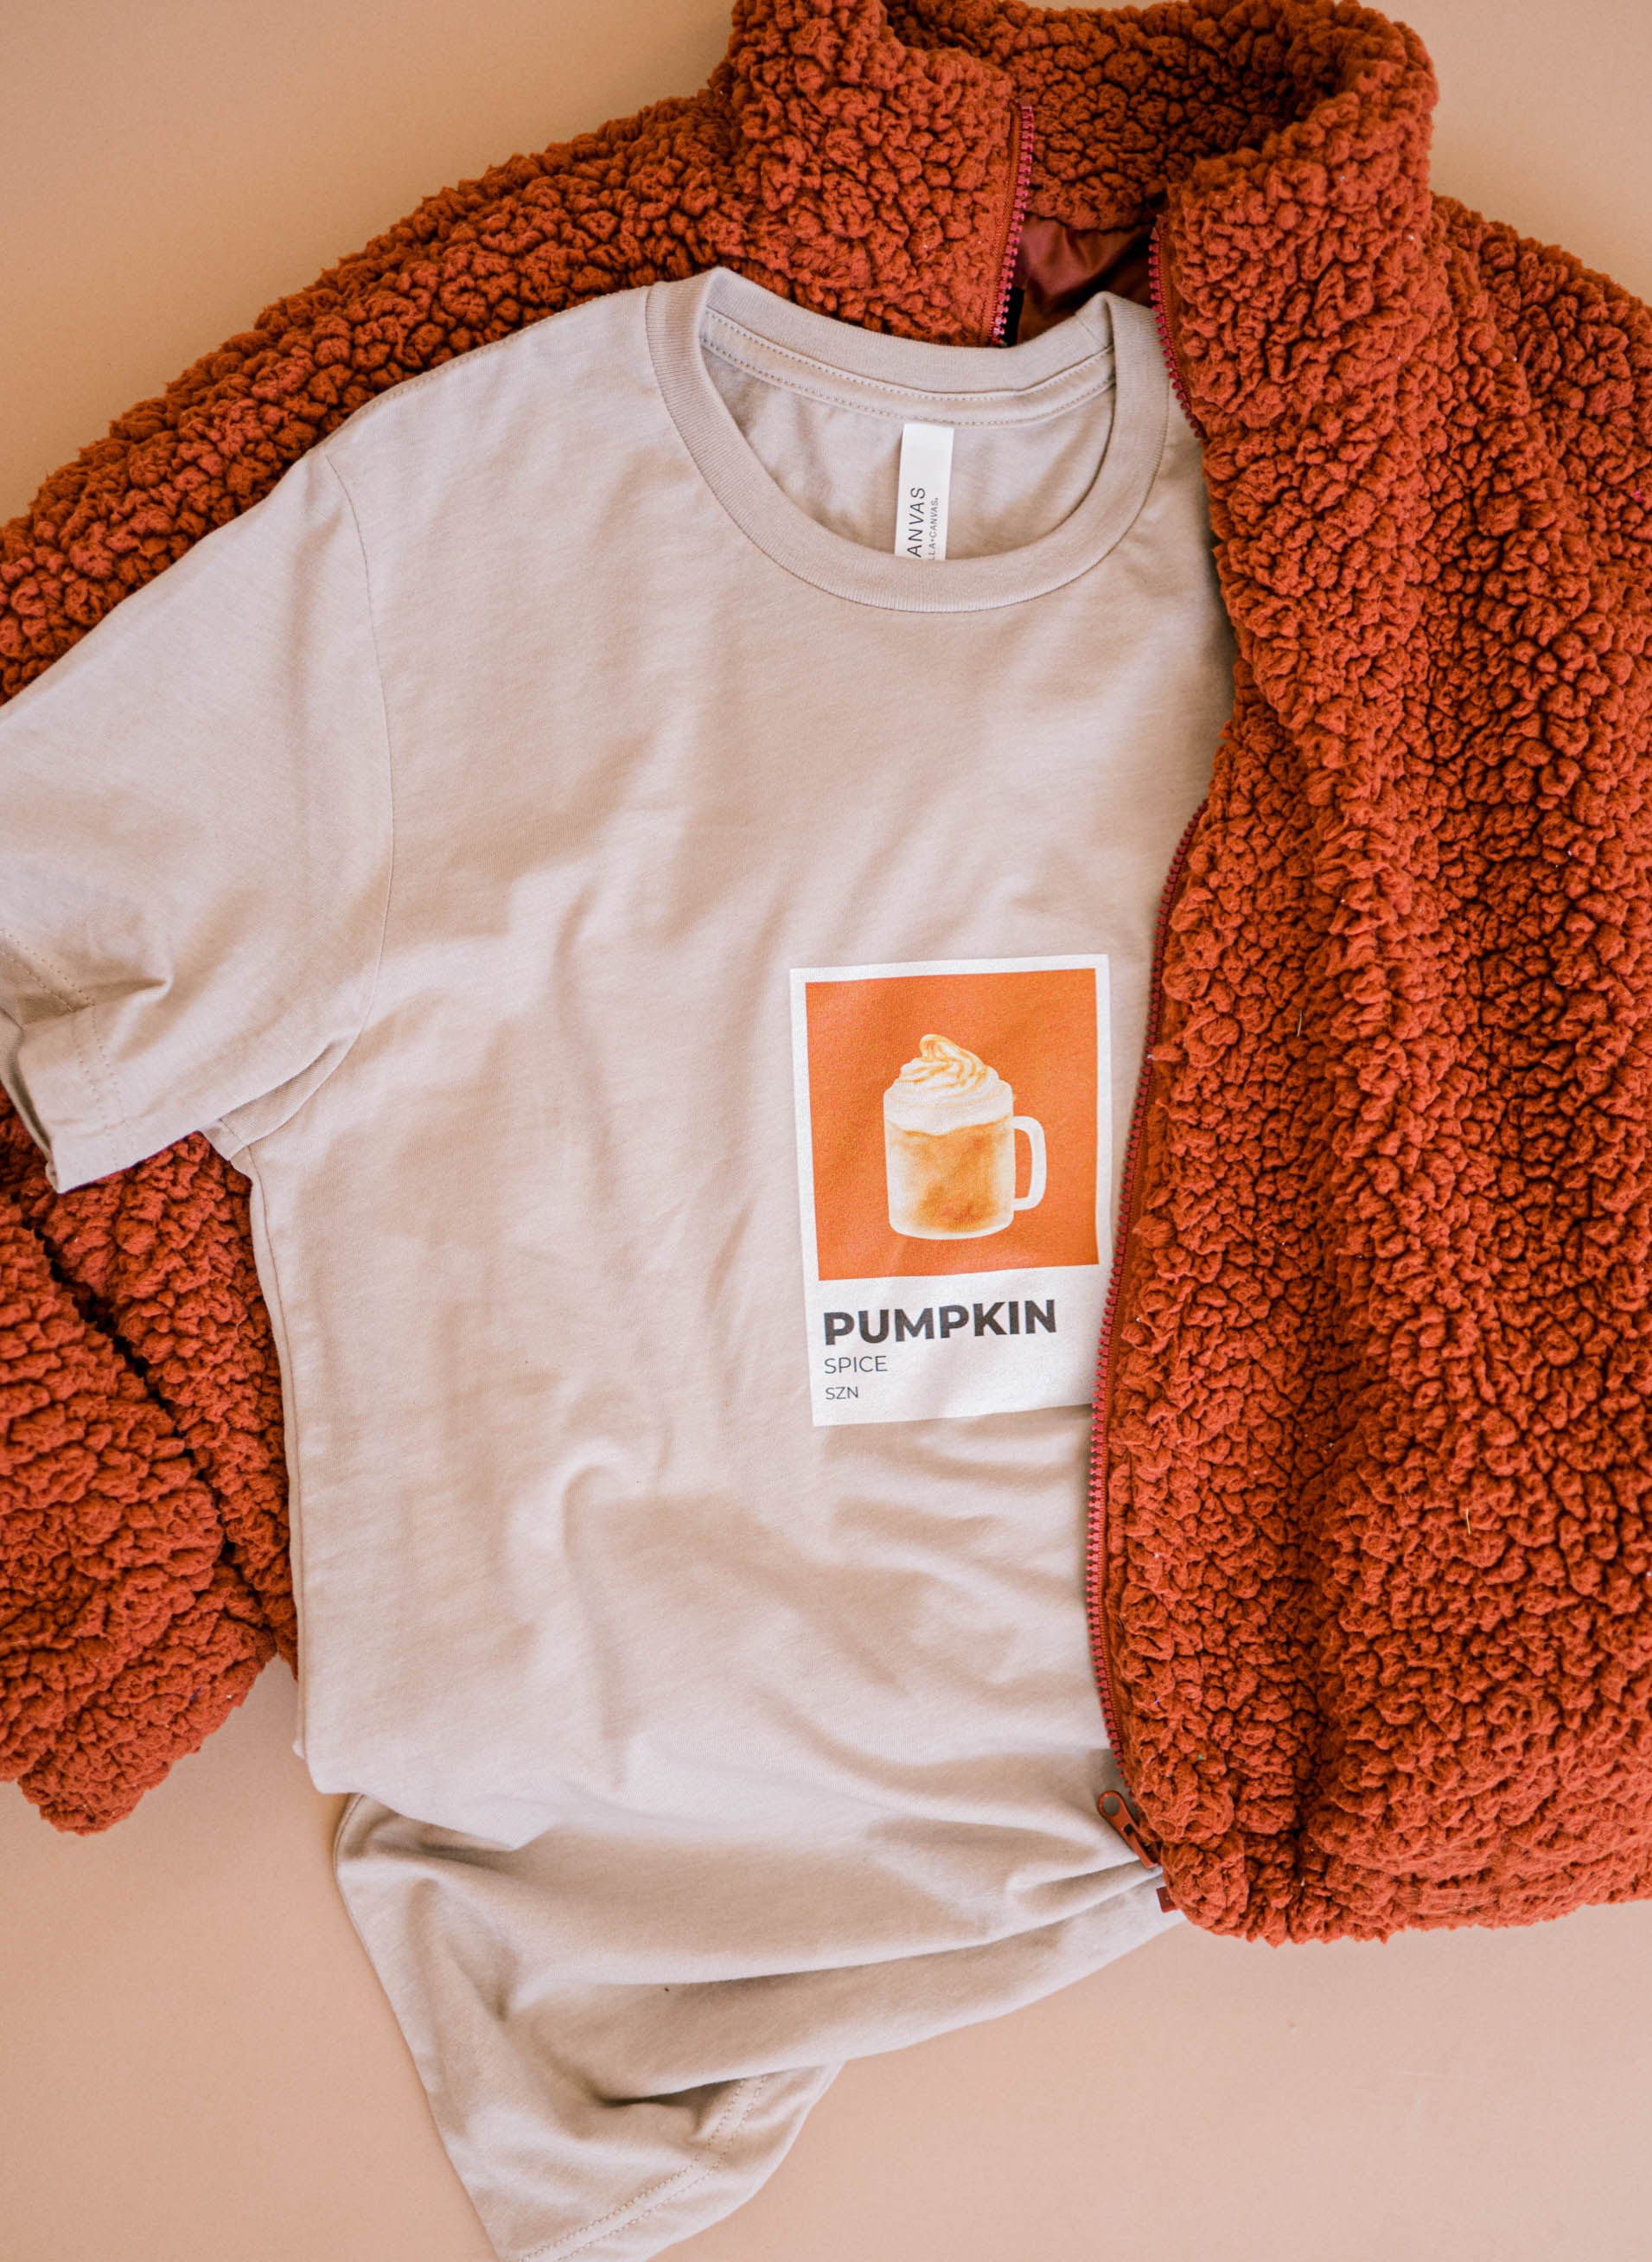 Pantone Pumpkin Spice Szn | Tee | Adult-Adult Tee-Sister Shirts-Sister Shirts, Cute & Custom Tees for Mama & Littles in Trussville, Alabama.